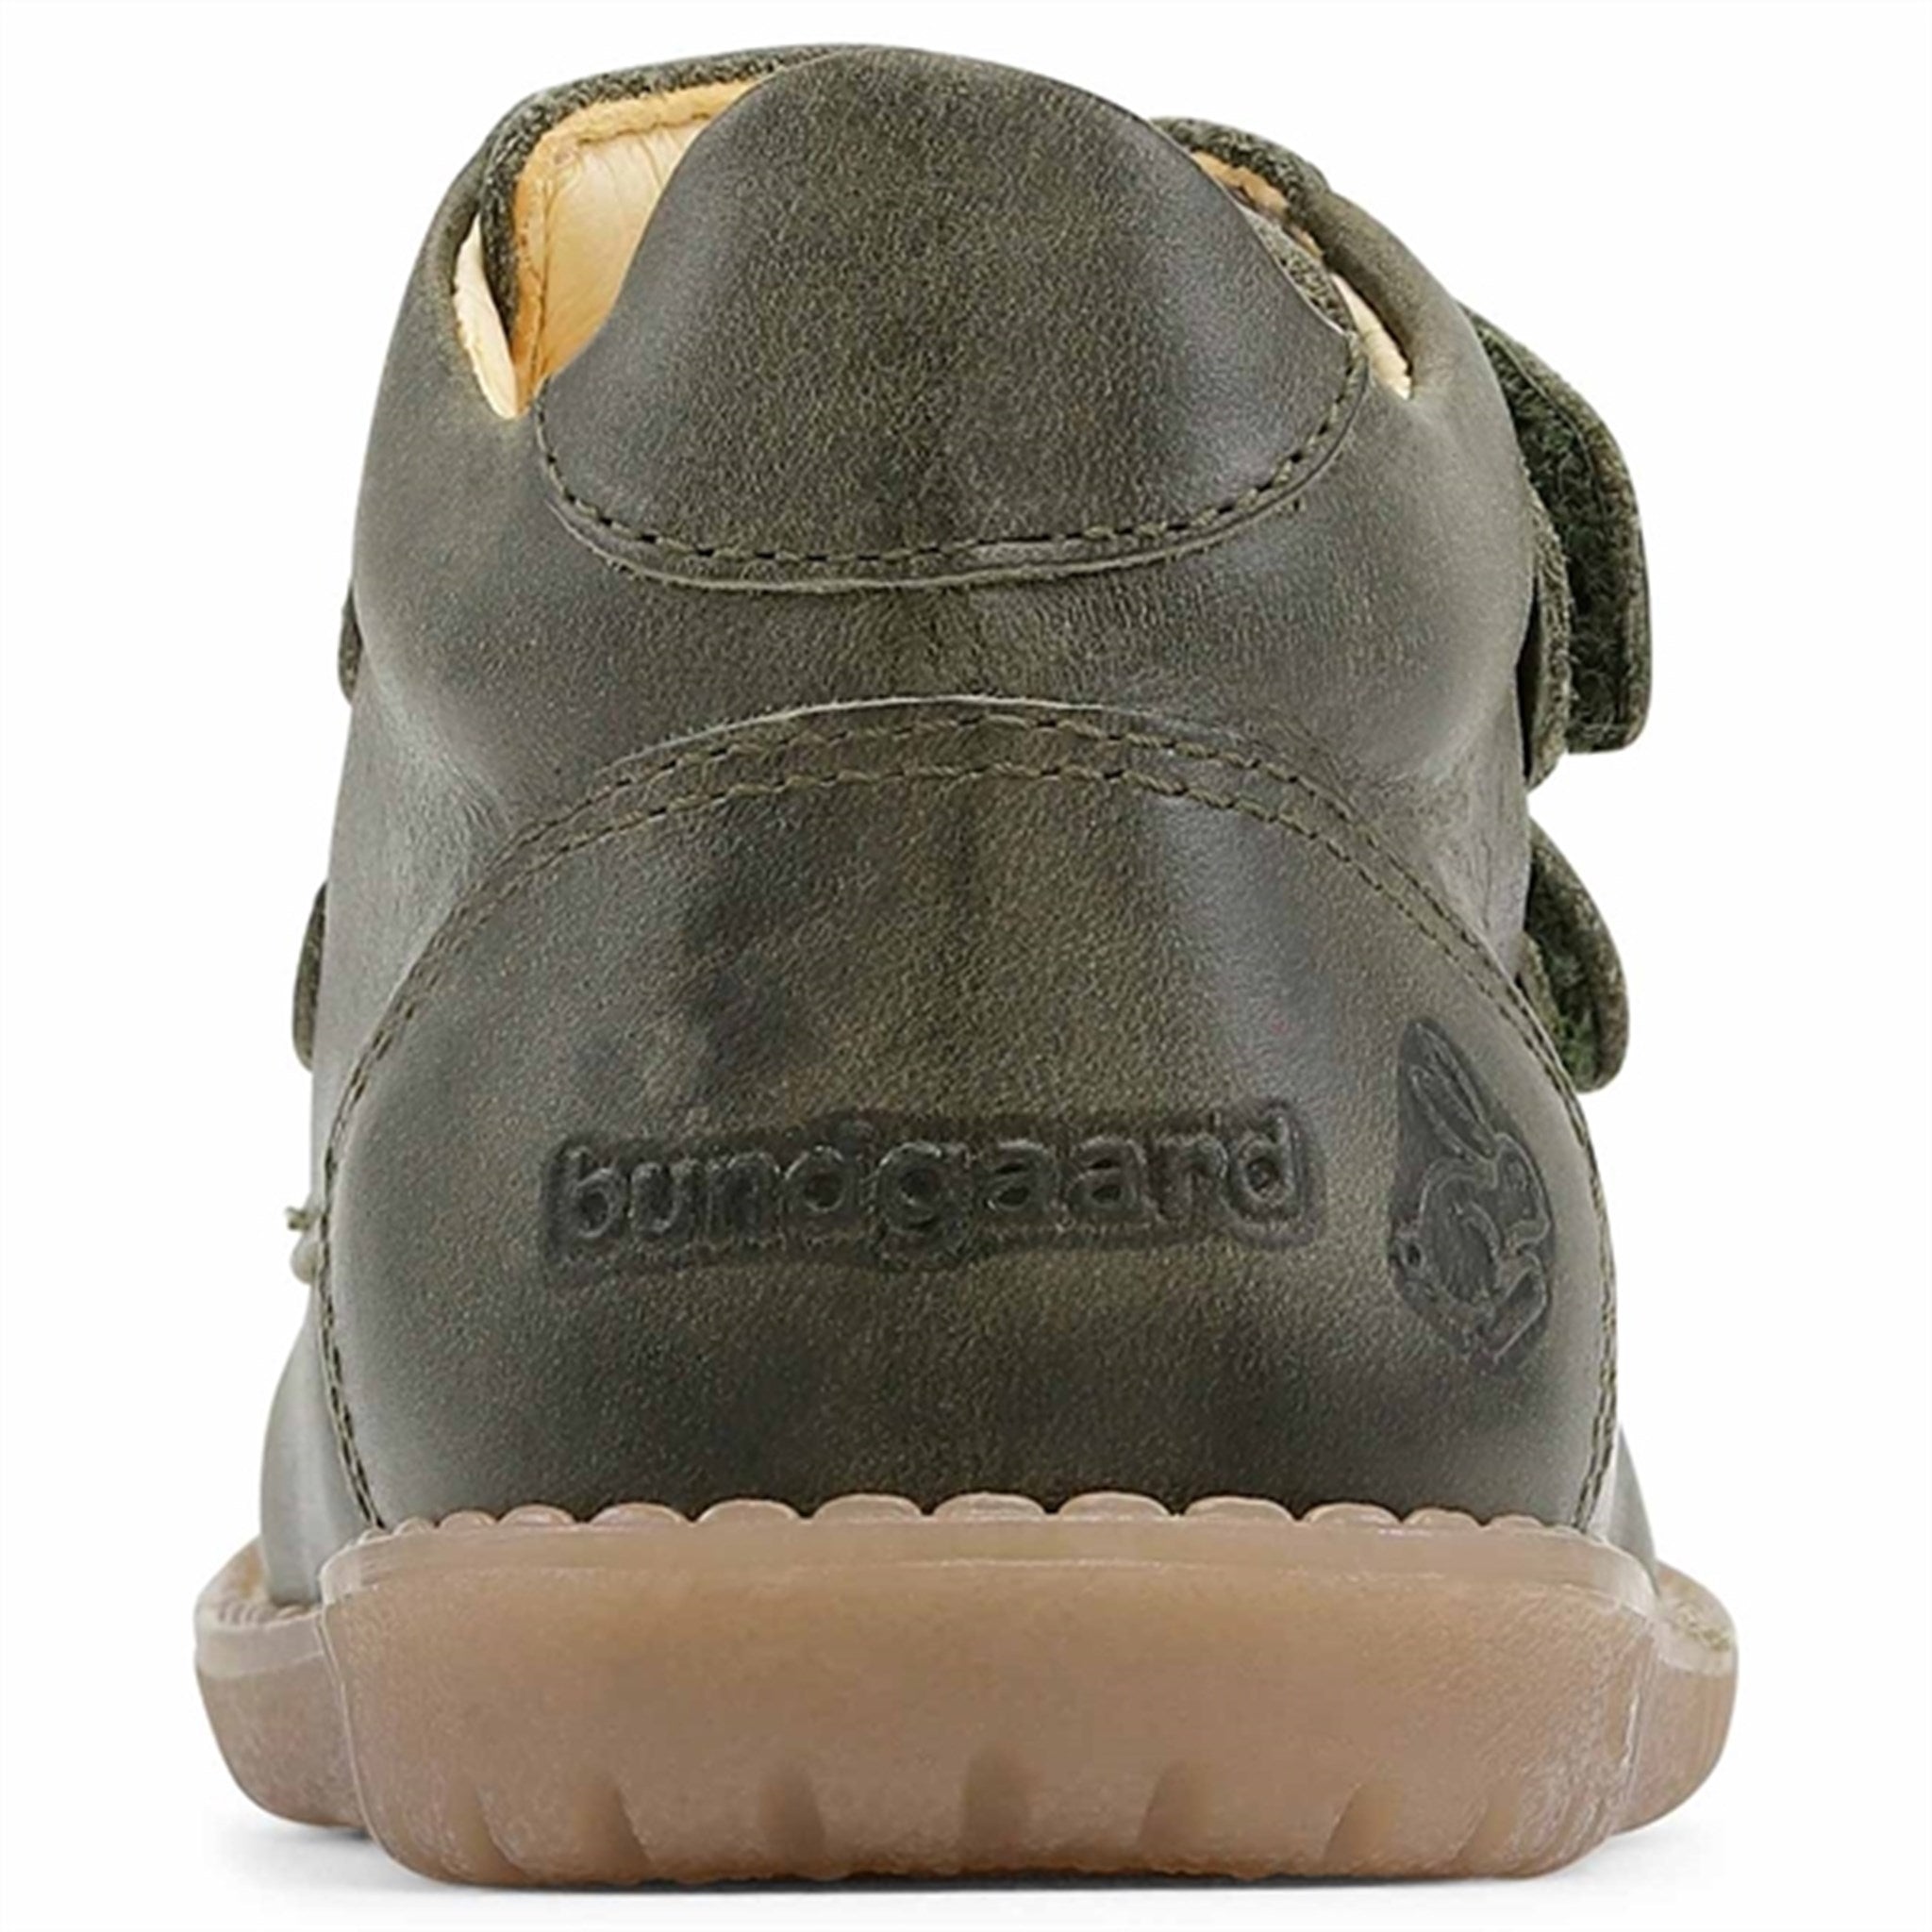 Bundgaard Ruby Velcro Army Shoes 3